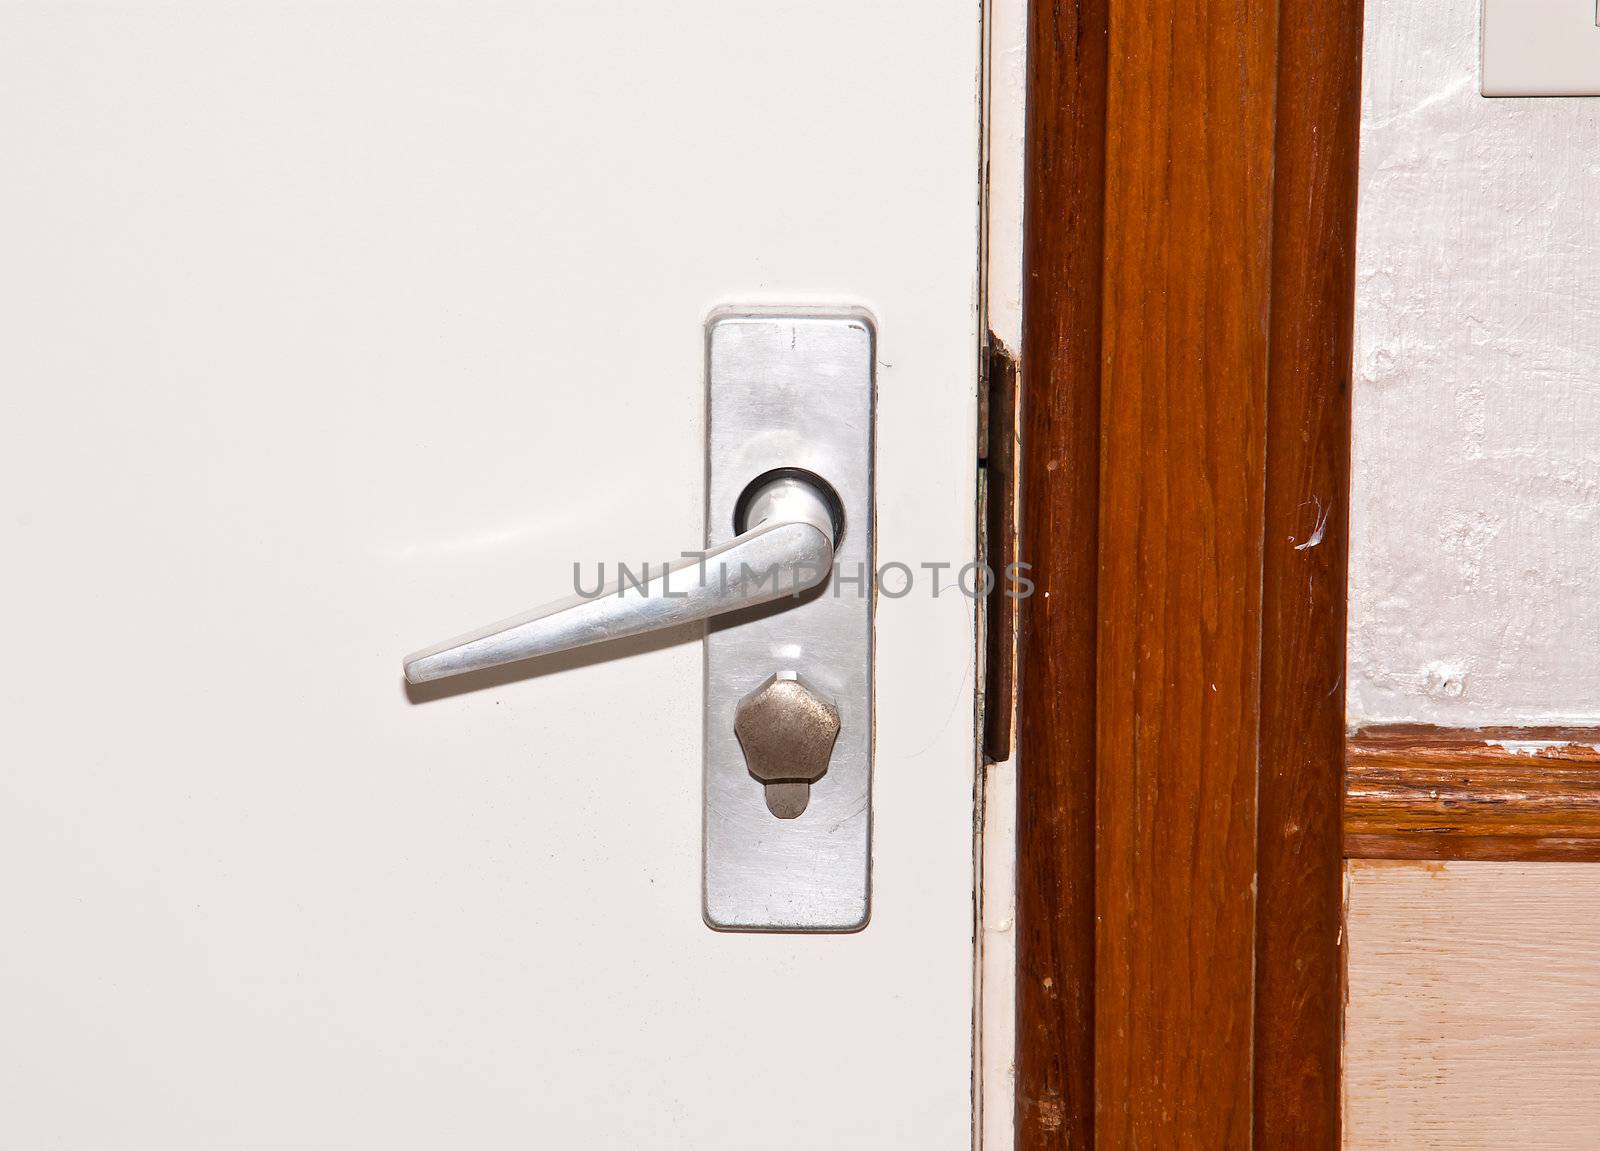 Aluminium door knob on the white door